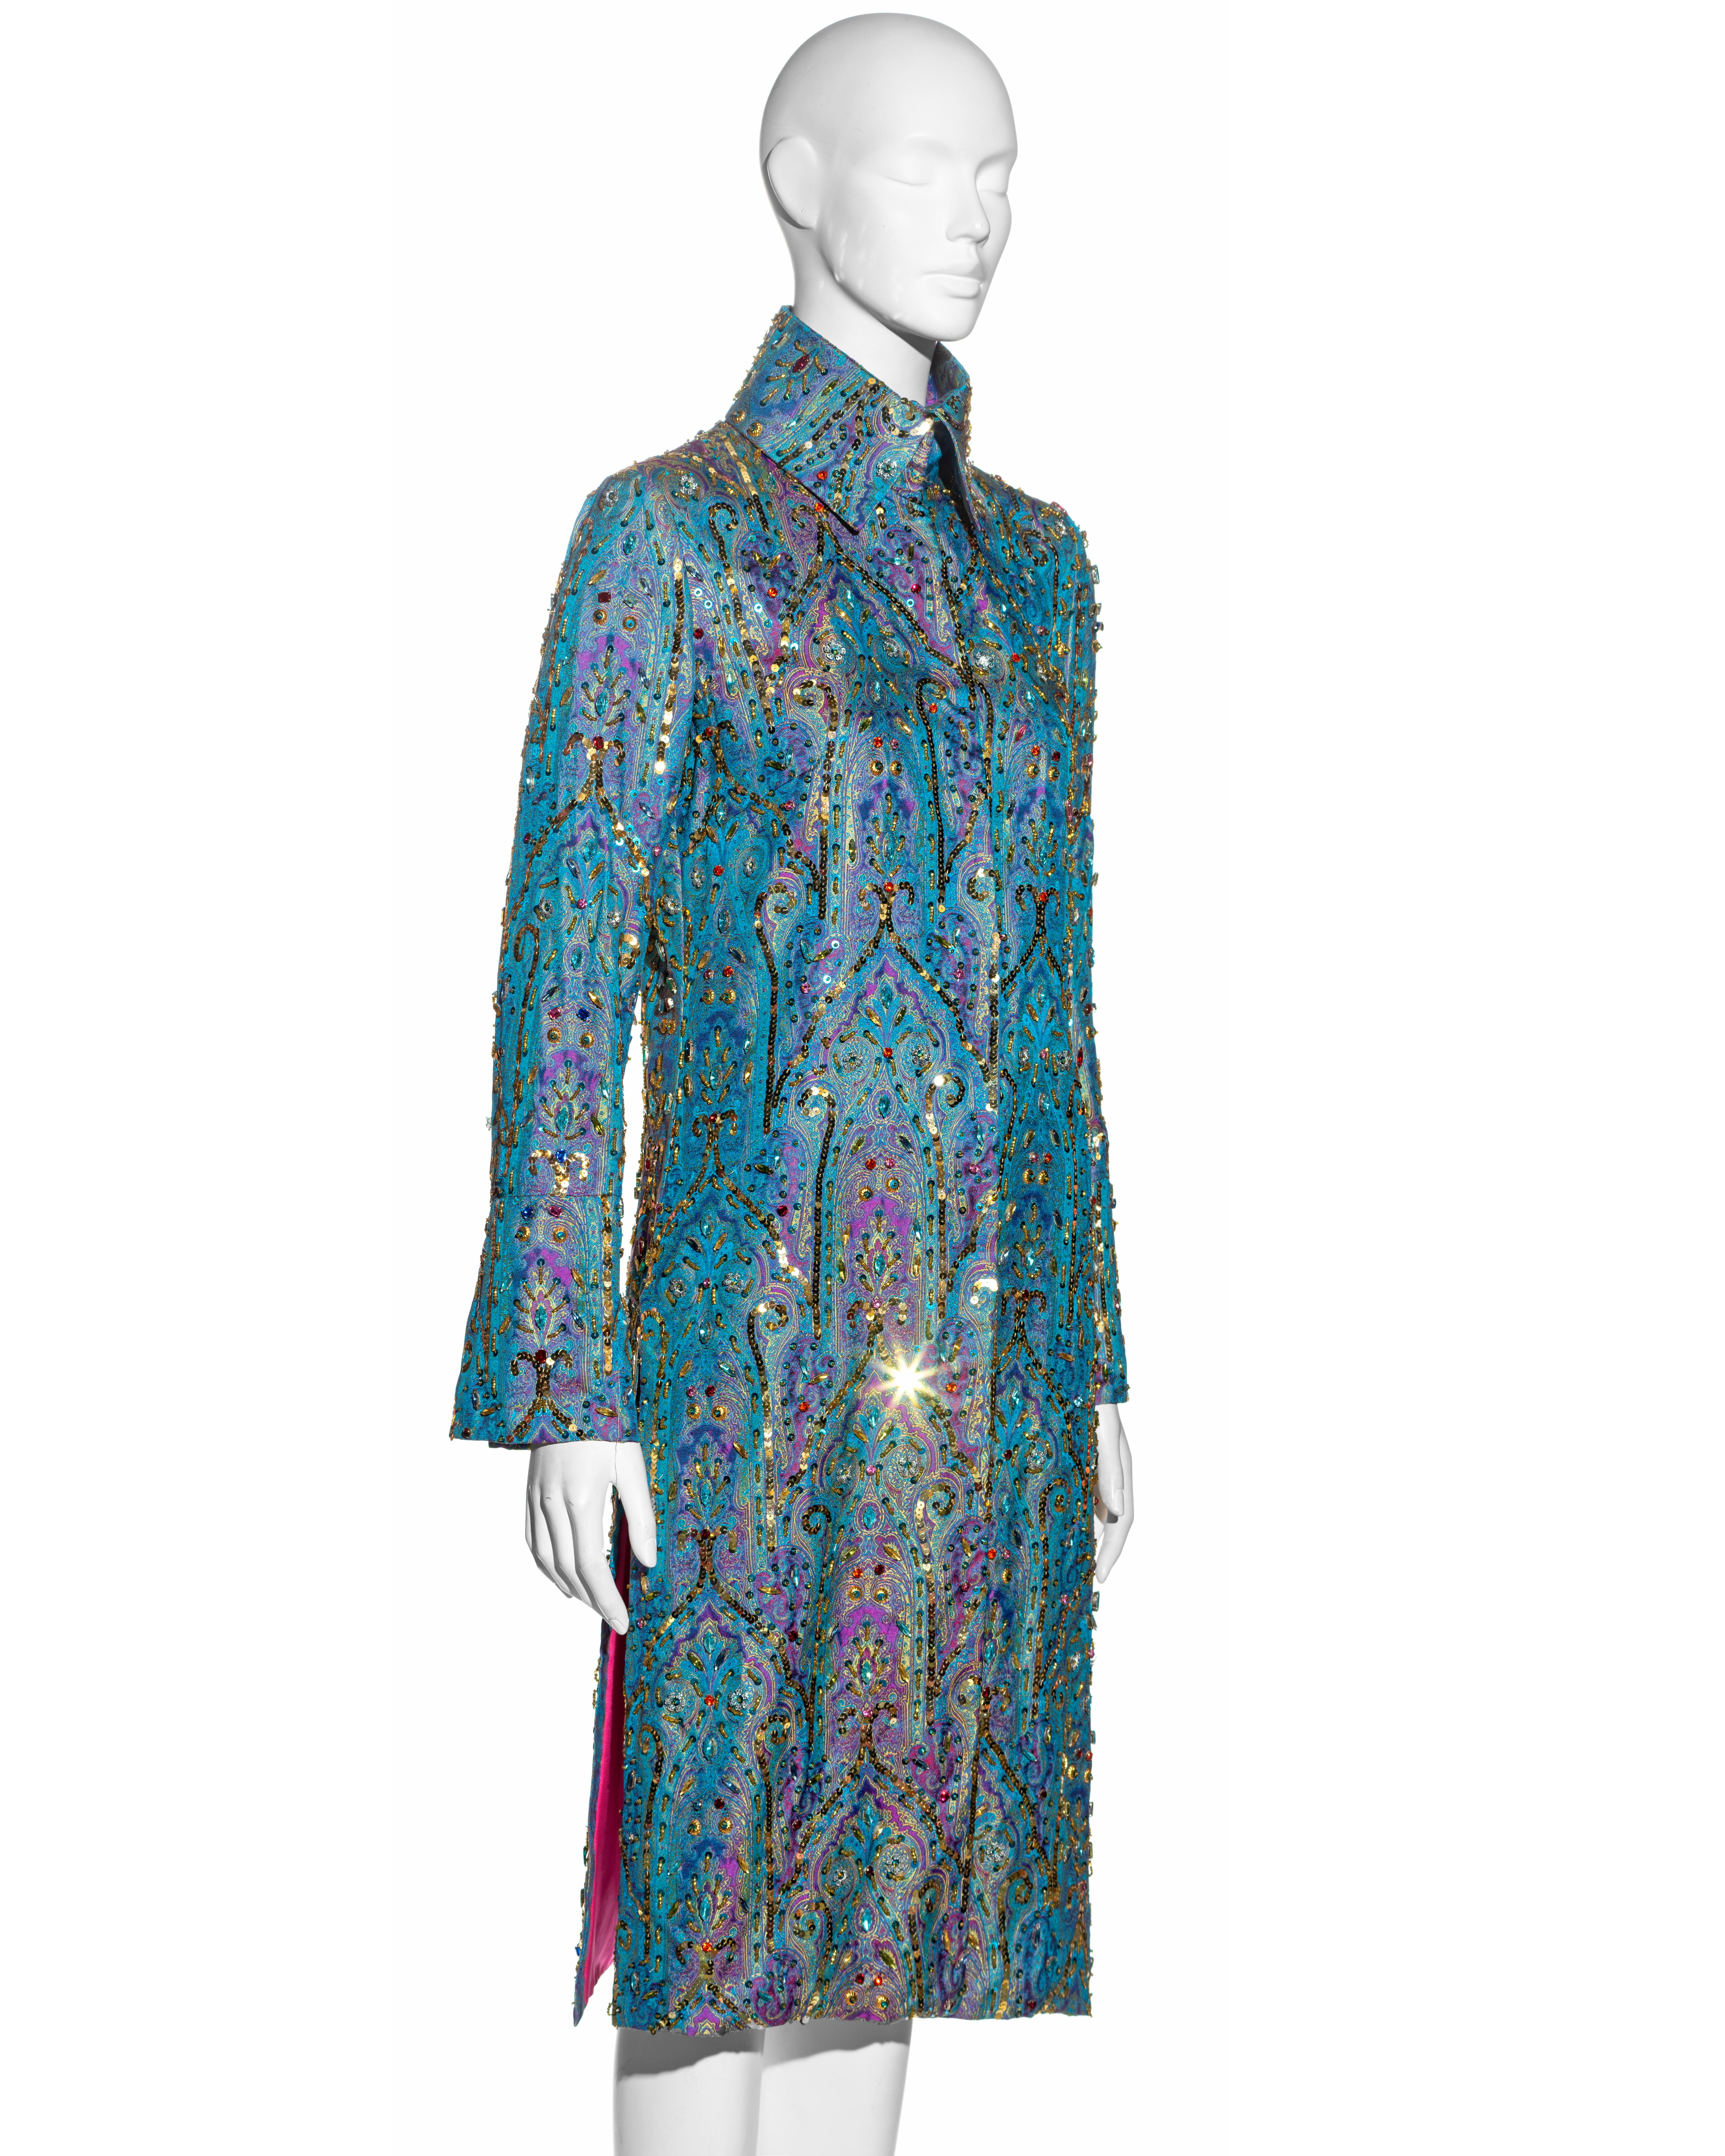 Dolce & Gabbana crystal embellished metallic silk brocade evening coat, ss 2000 For Sale 1